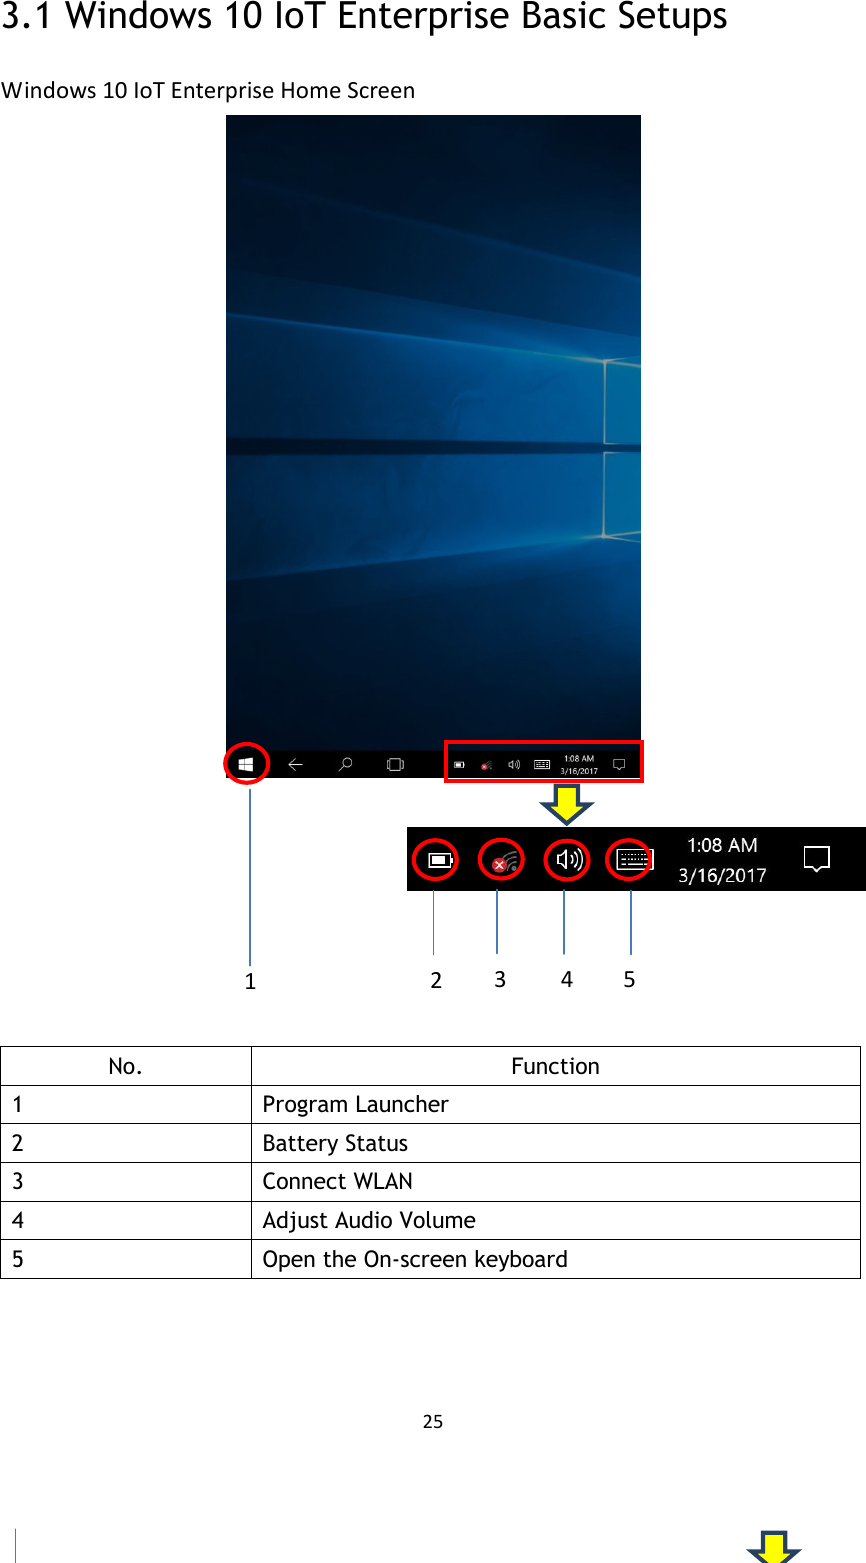 25  3.1 Windows 10 IoT Enterprise Basic Setups Windows 10 IoT Enterprise Home Screen        No.  Function 1  Program Launcher 2  Battery Status 3  Connect WLAN 4  Adjust Audio Volume 5  Open the On-screen keyboard    1 2 3 4 5 